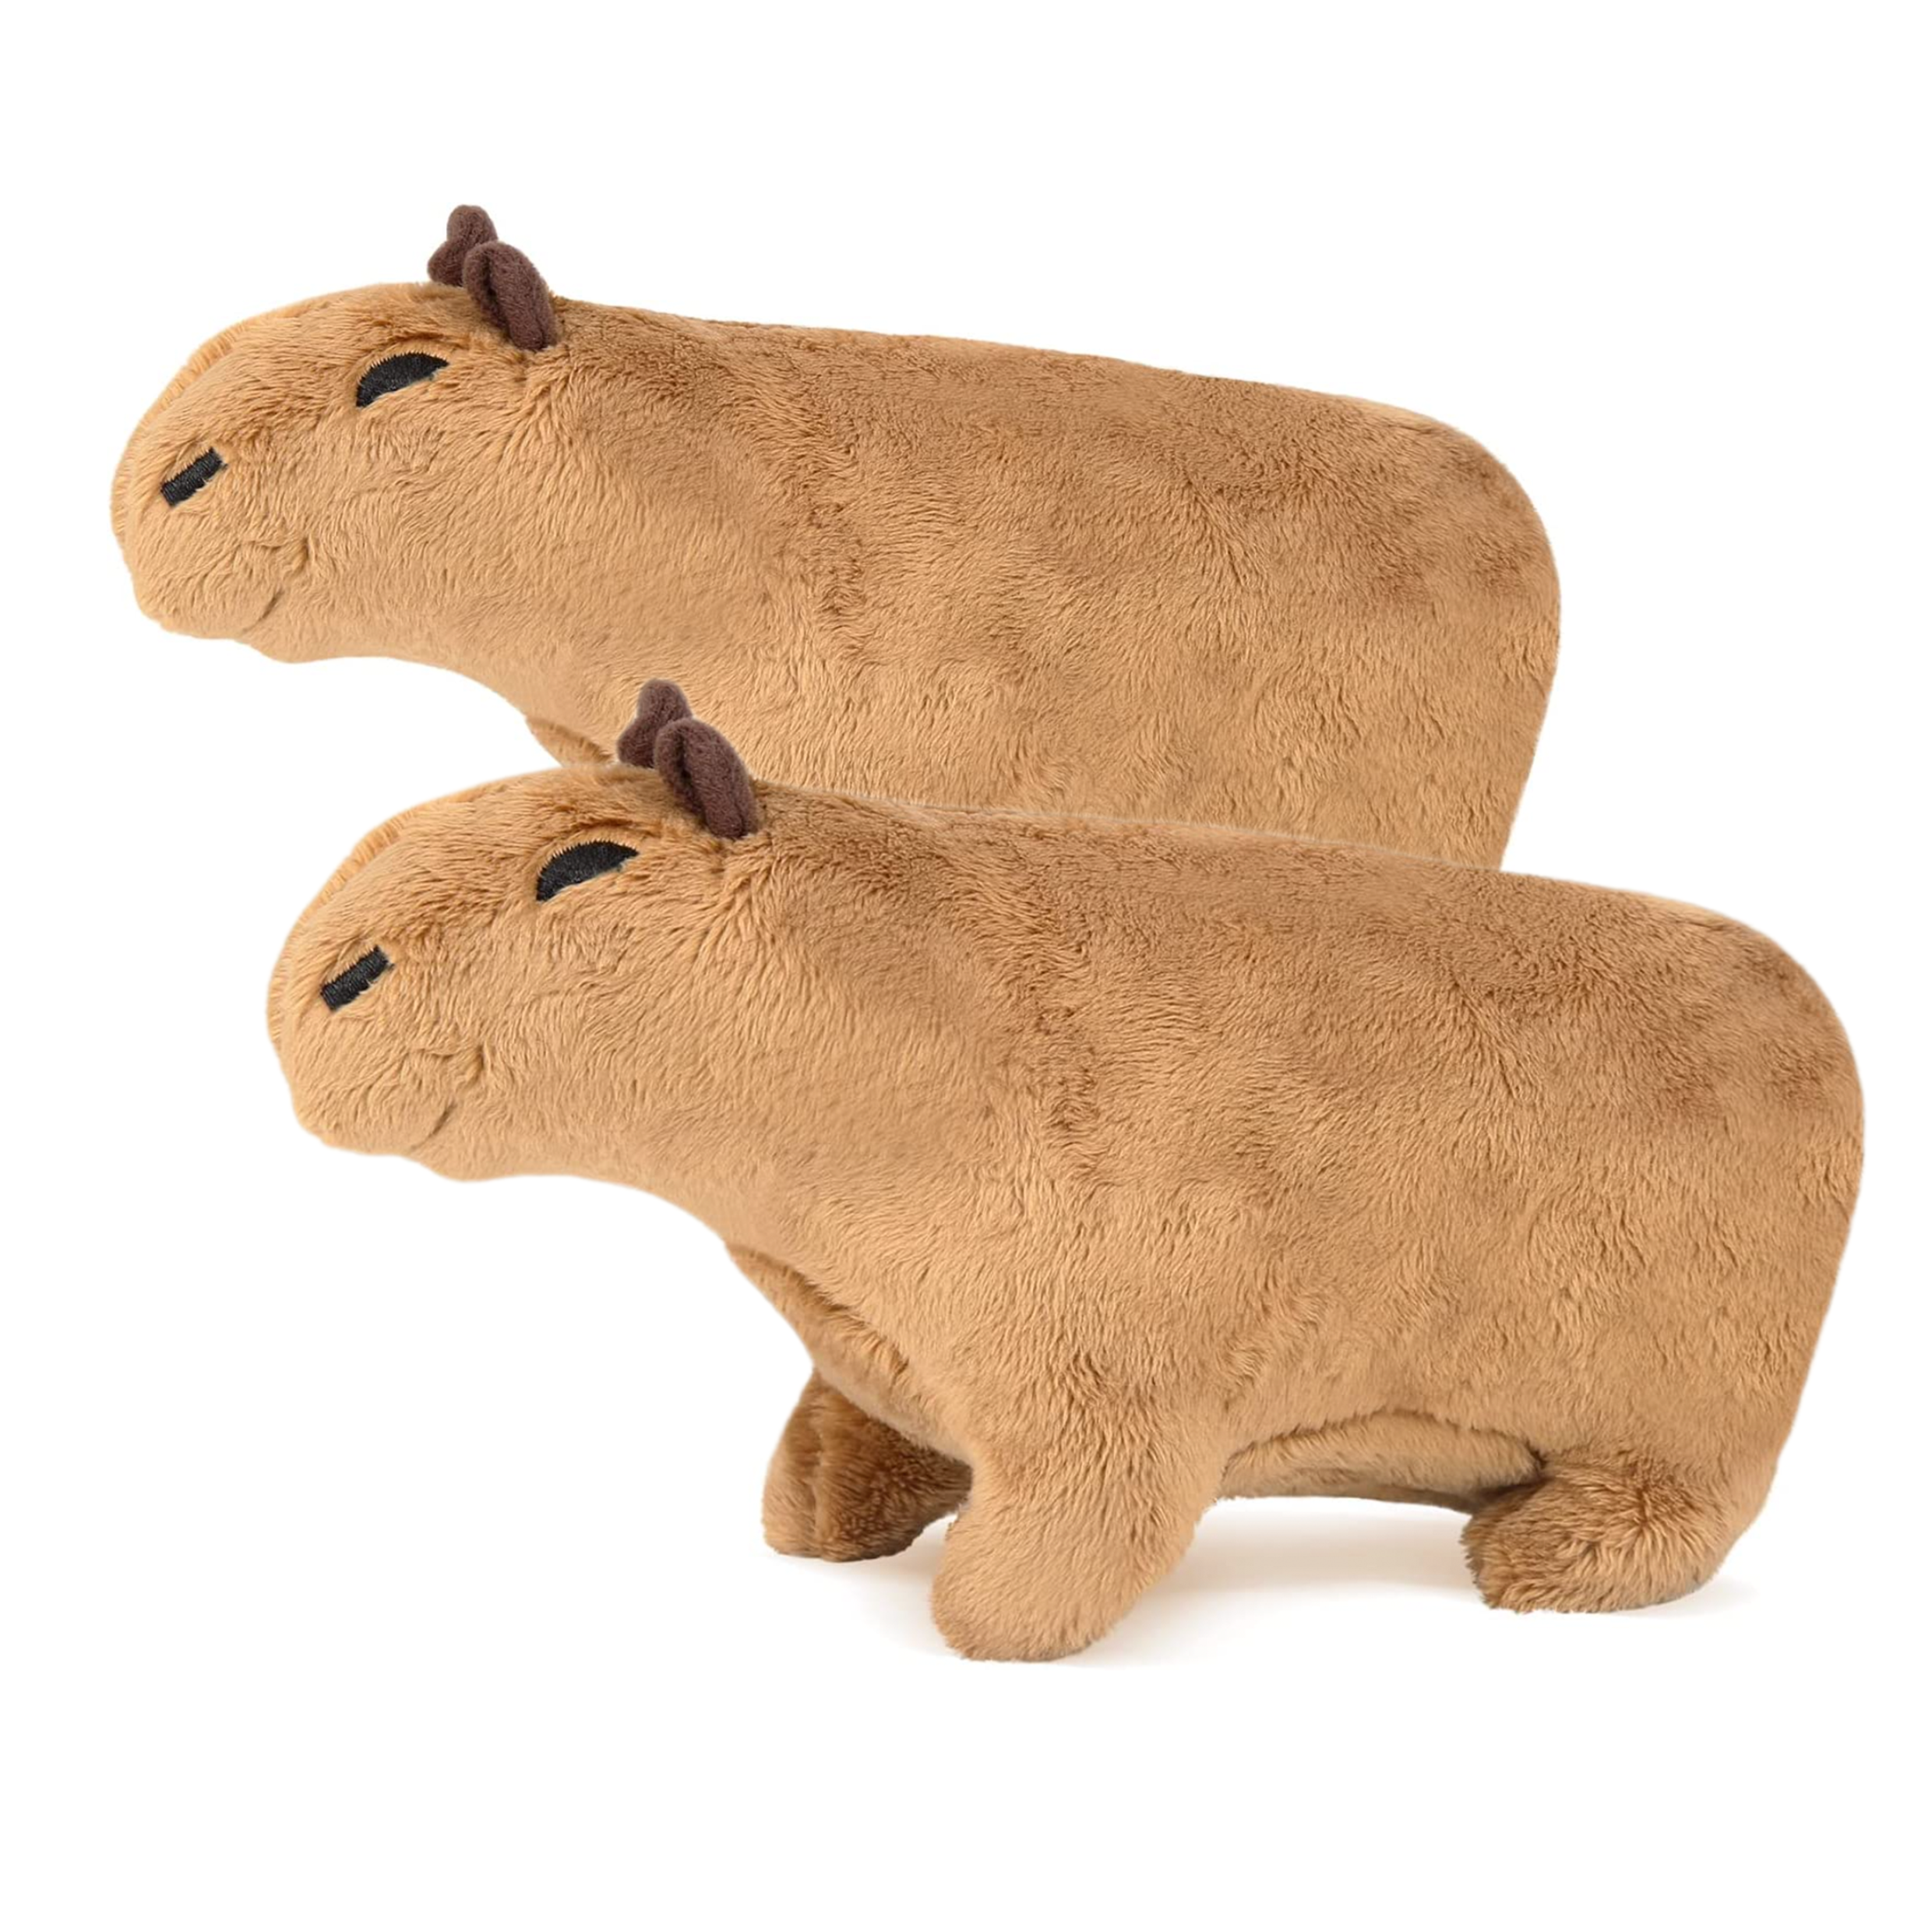 ⚡⚡Last Day Promotion 48% OFF - CapybaraPlush - Fluffy & Cute Plushie